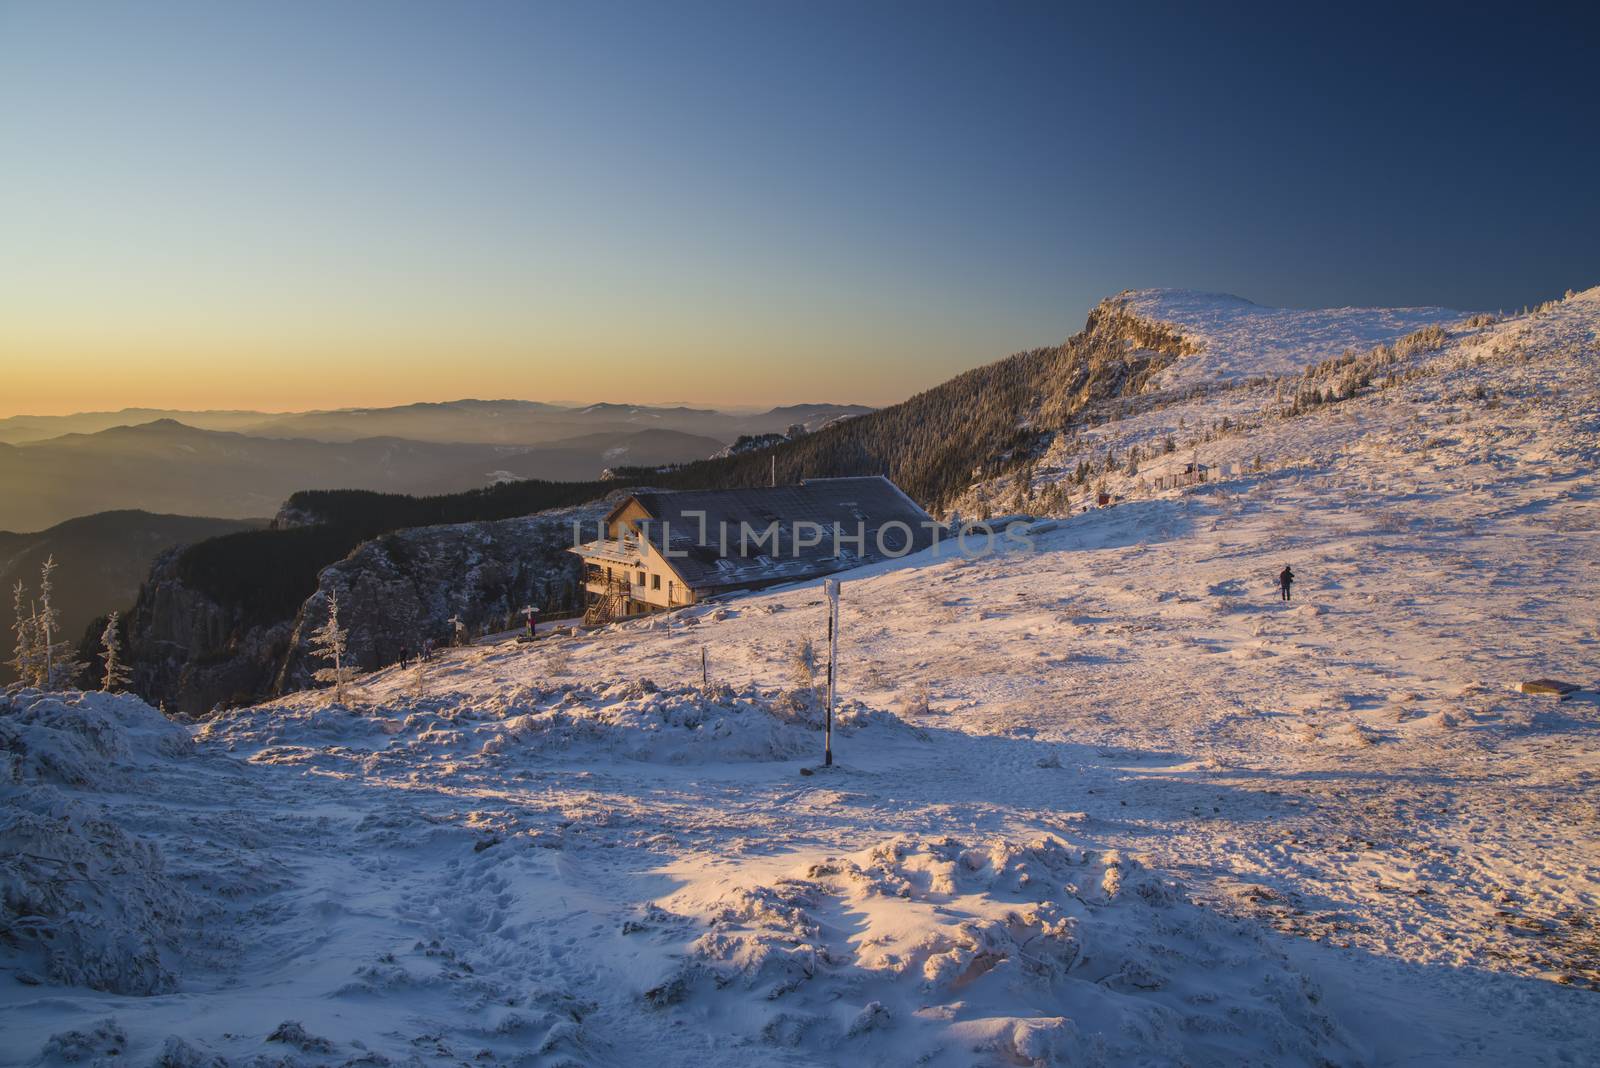 Mountain chalet landscape at sunrise in Romanian Carpathians, frozen scene